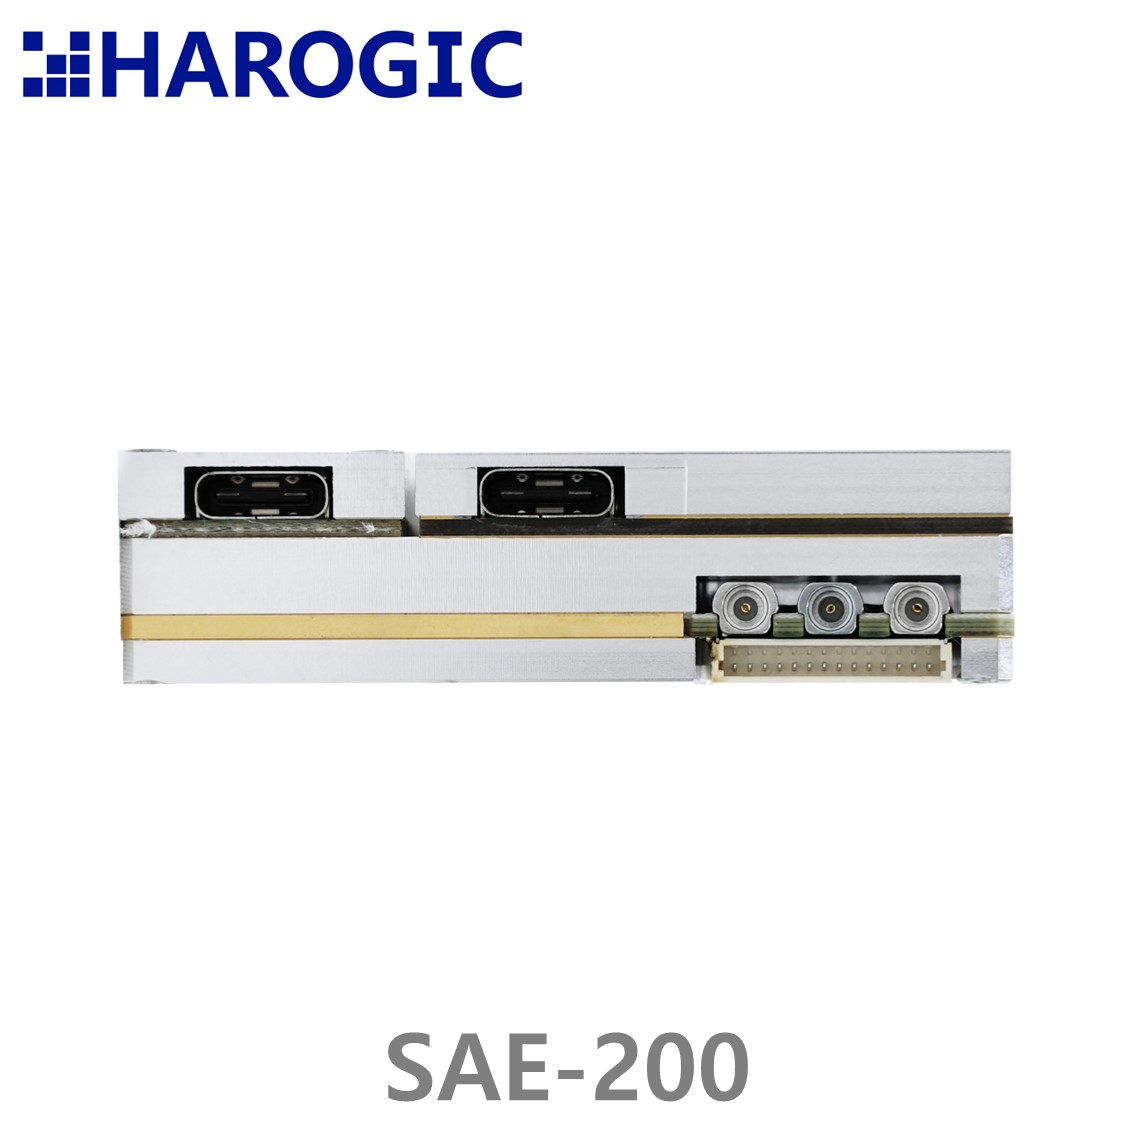 [ HAROGIC ] SAE-200,  USB 초소형 리얼타임 스펙트럼분석기 9kHz - 20.0 GHz, 100MHz 대역폭, 1.2THz/s sweep speed, USB3.0